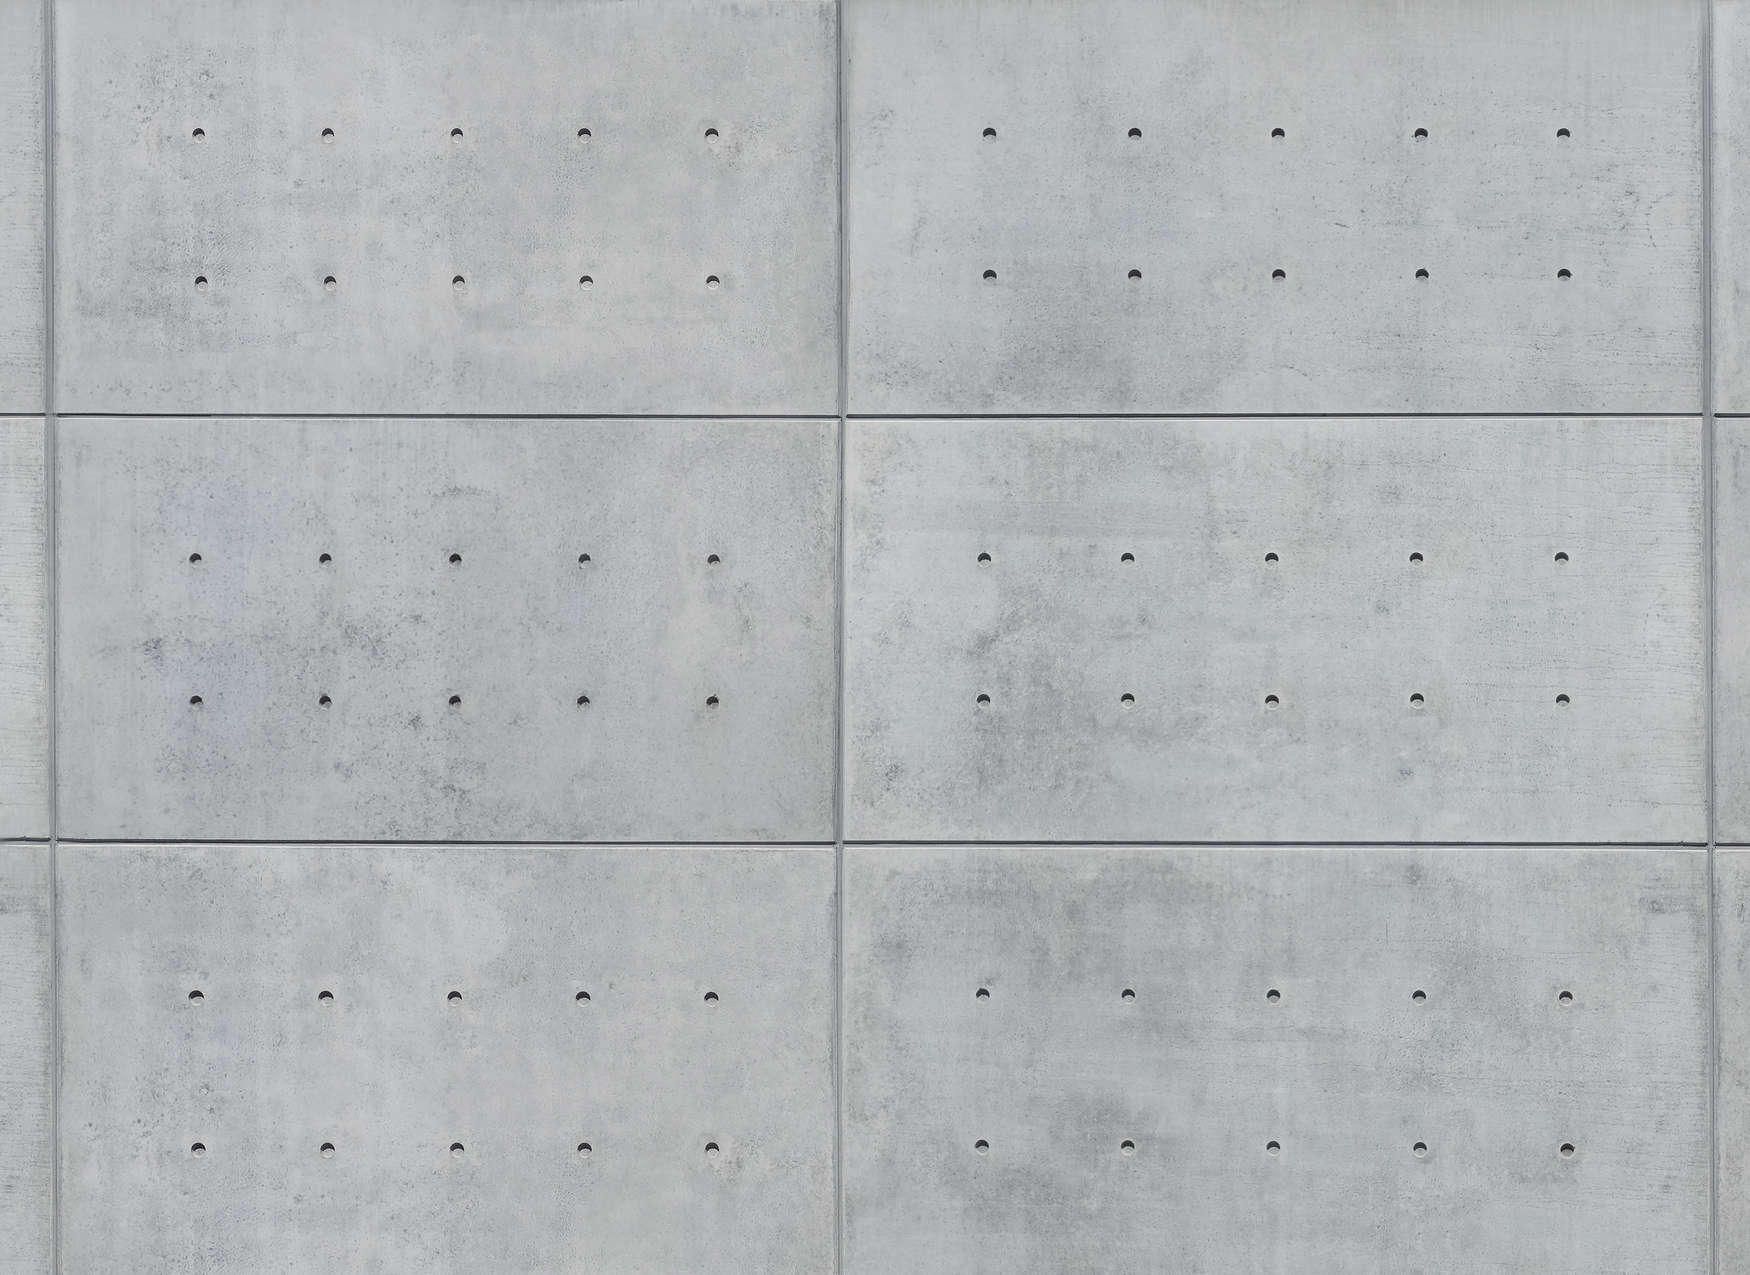             Concrete slabs in 3D look mural - Grey
        